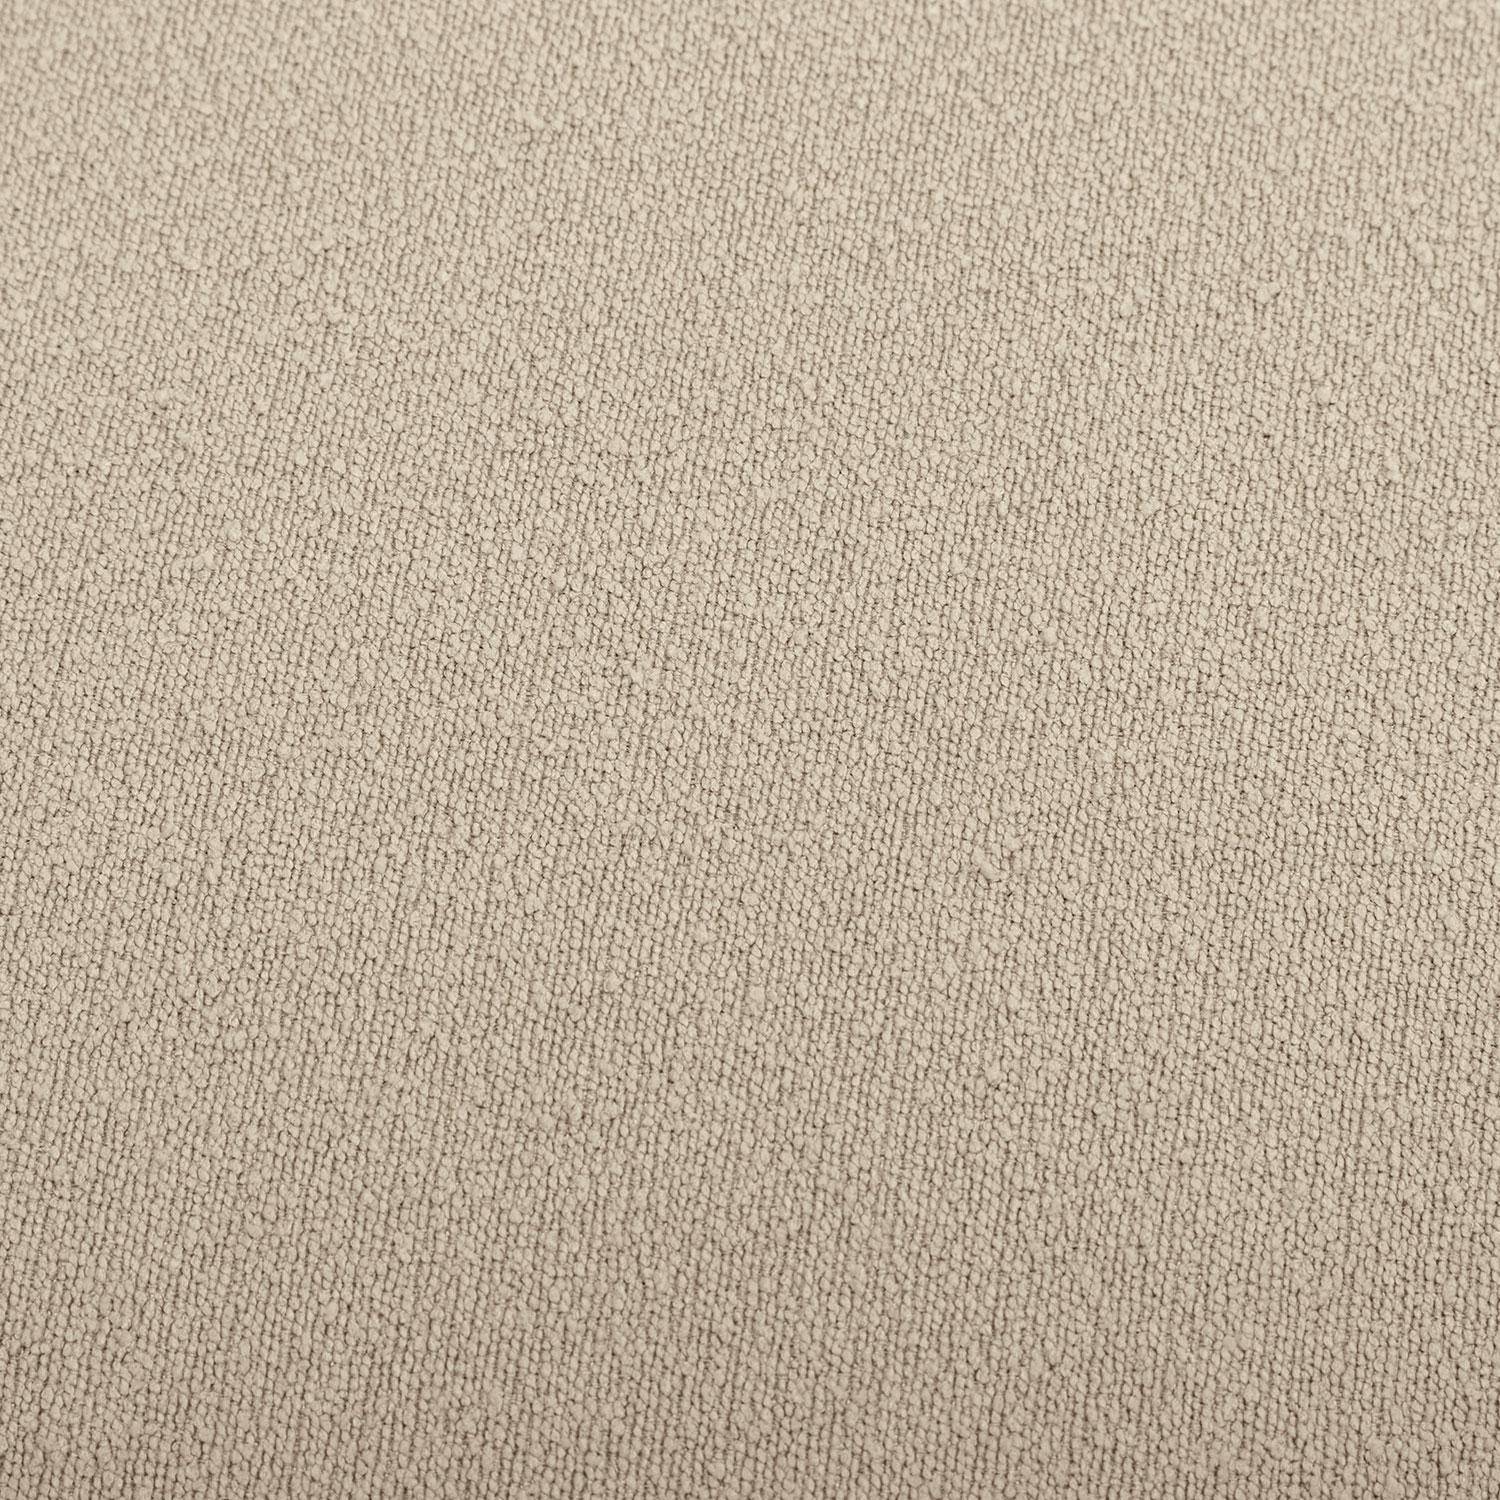 taburete, escabel con forma de guijarro en tejido beige, TAO Anch 60 x Prof 44 x Alt 40cm,sweeek,Photo7